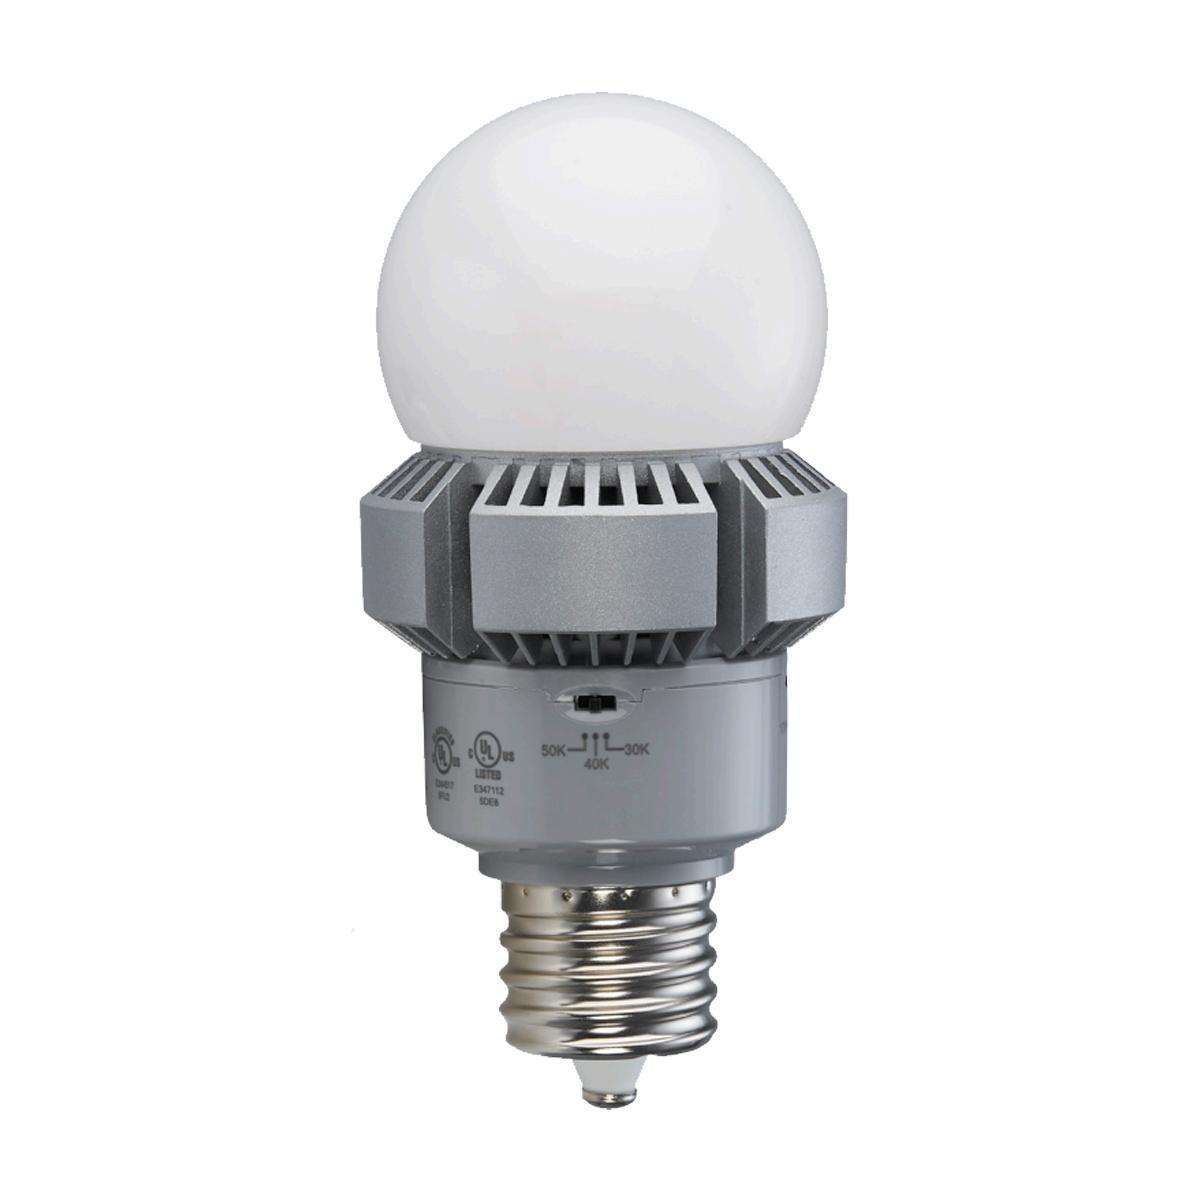 A23 LED Bulb, 45 Watt, 8775 Lumens, 30K/40K/50K, EX39 Mogul Extended Base, Frosted Finish